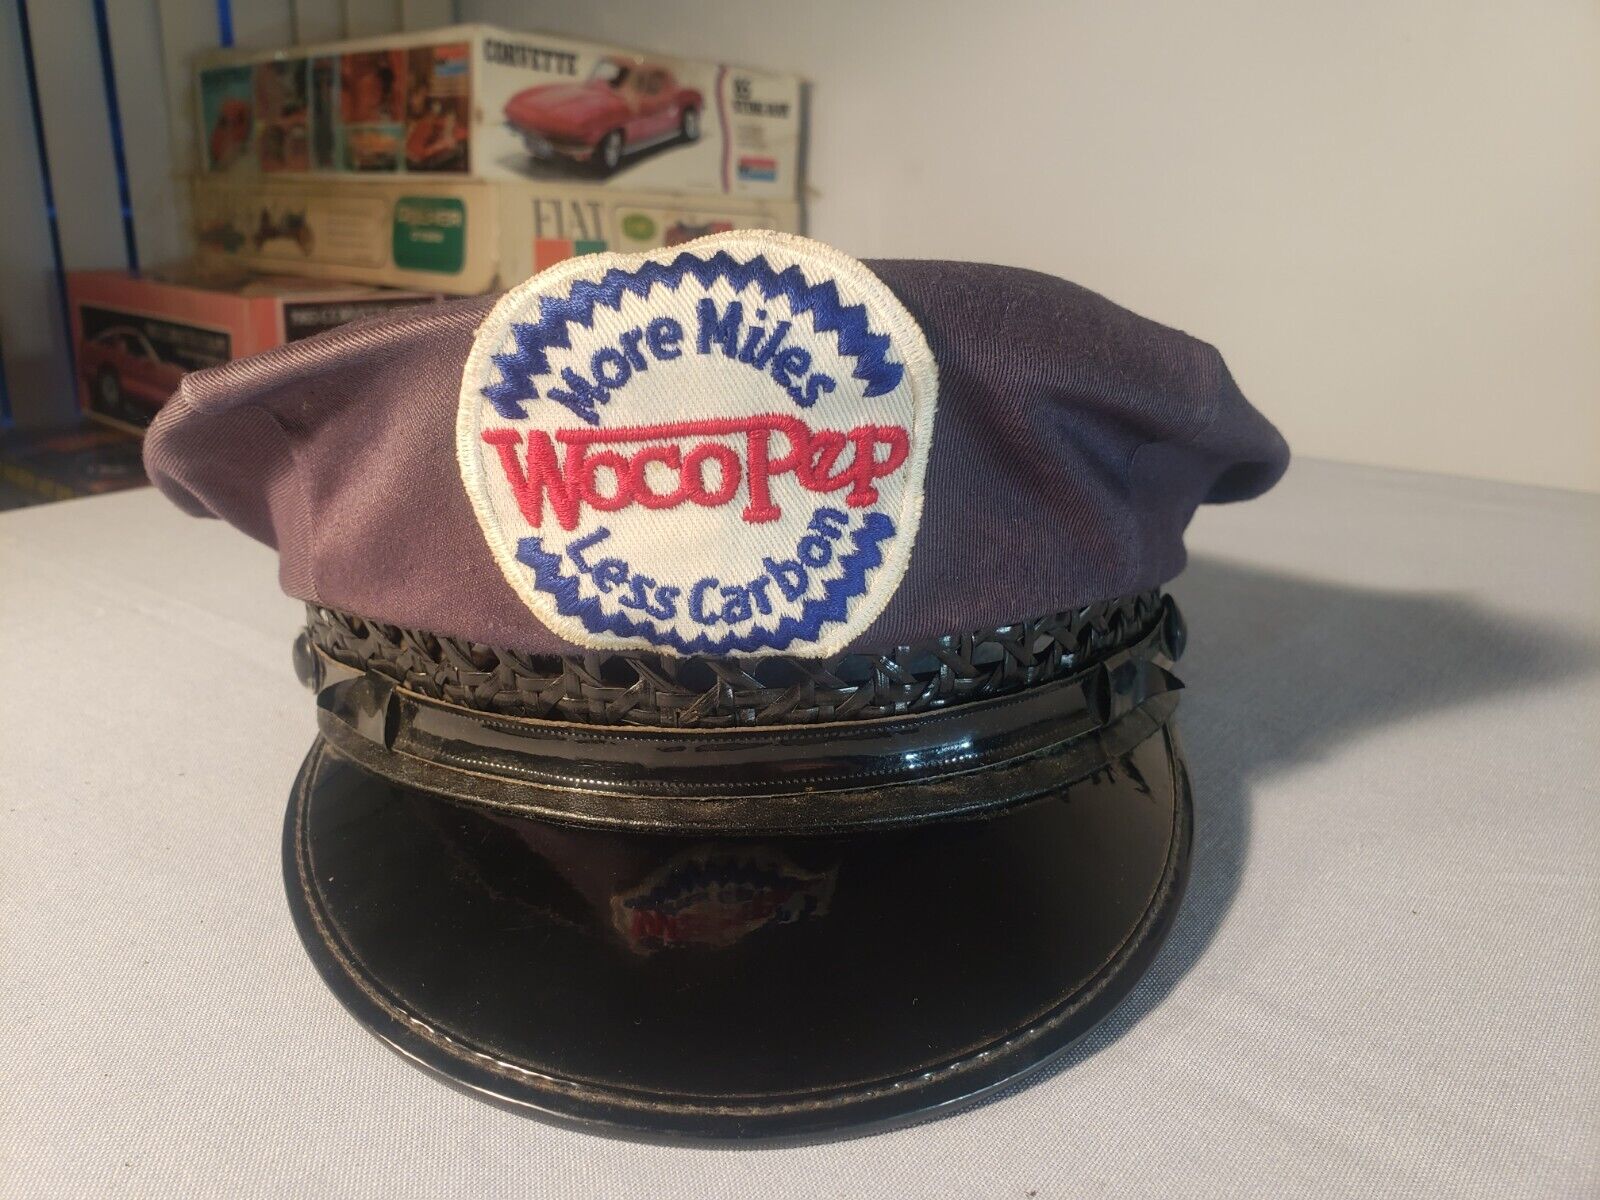 Old Original 7-1/8 WOCO PEP Gas Service Station Attendant Hat EXCELLENT SHAPE